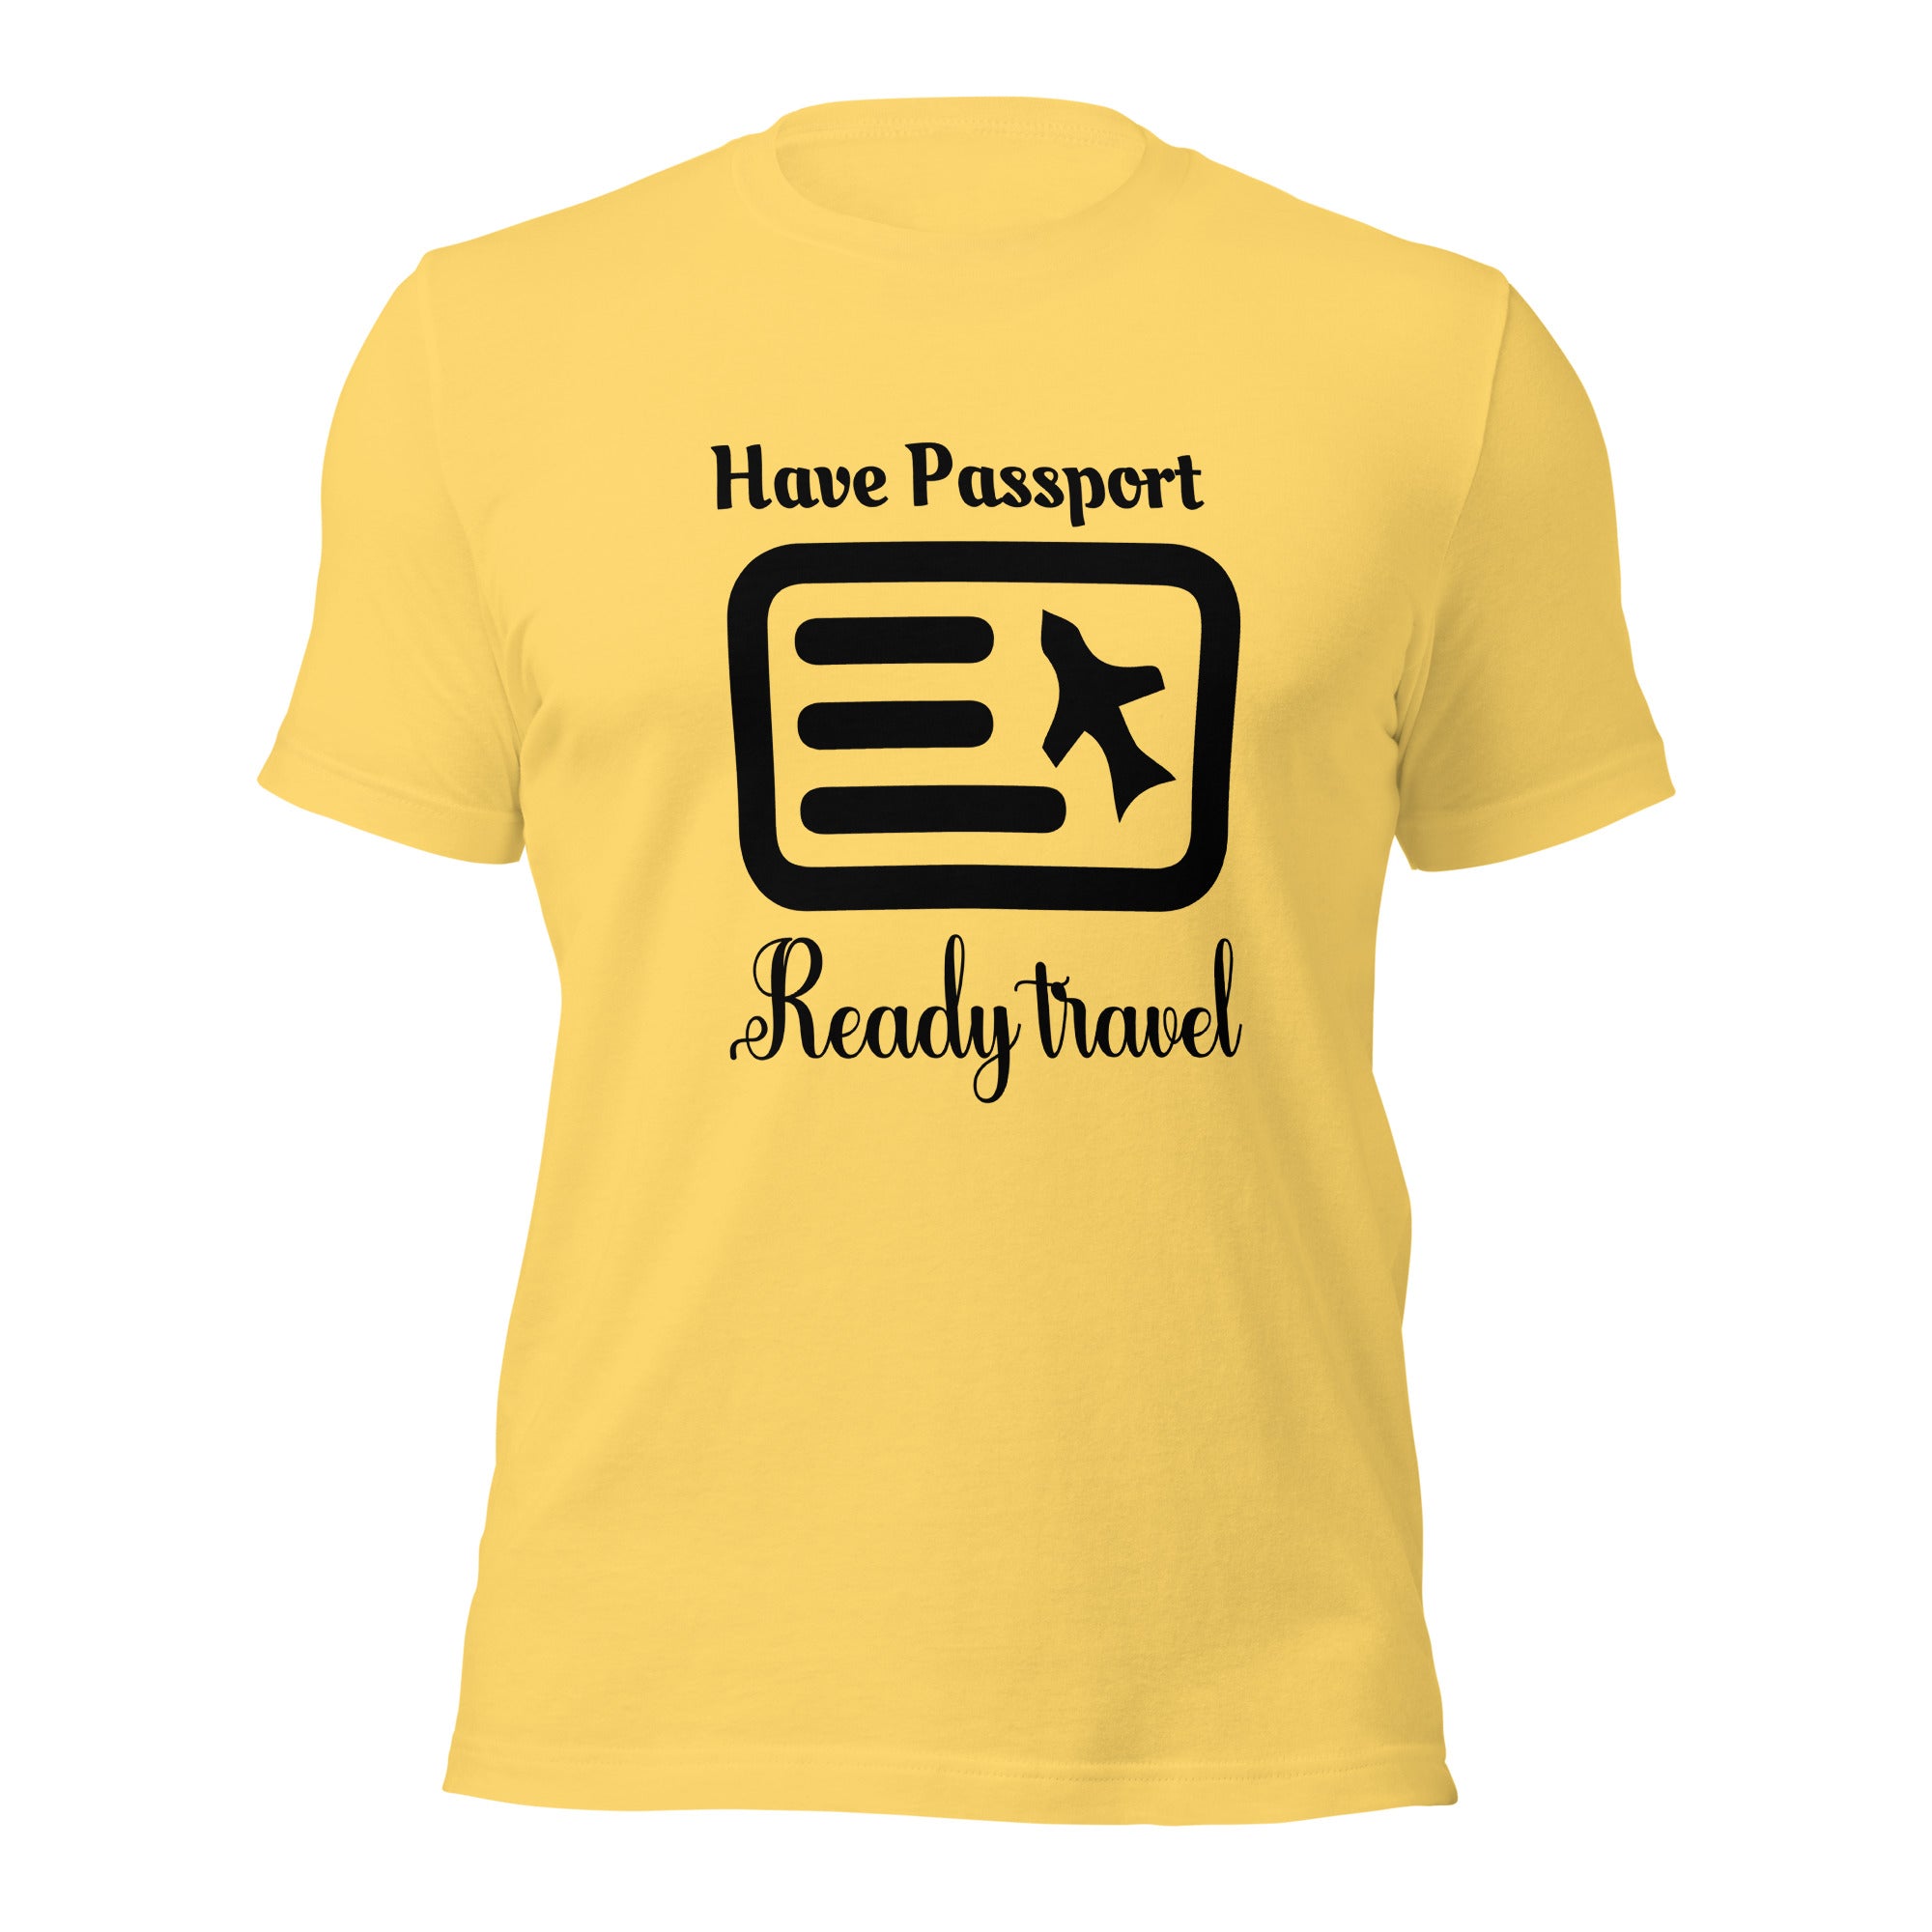 Have Passport Ready Travel - T-Shirt